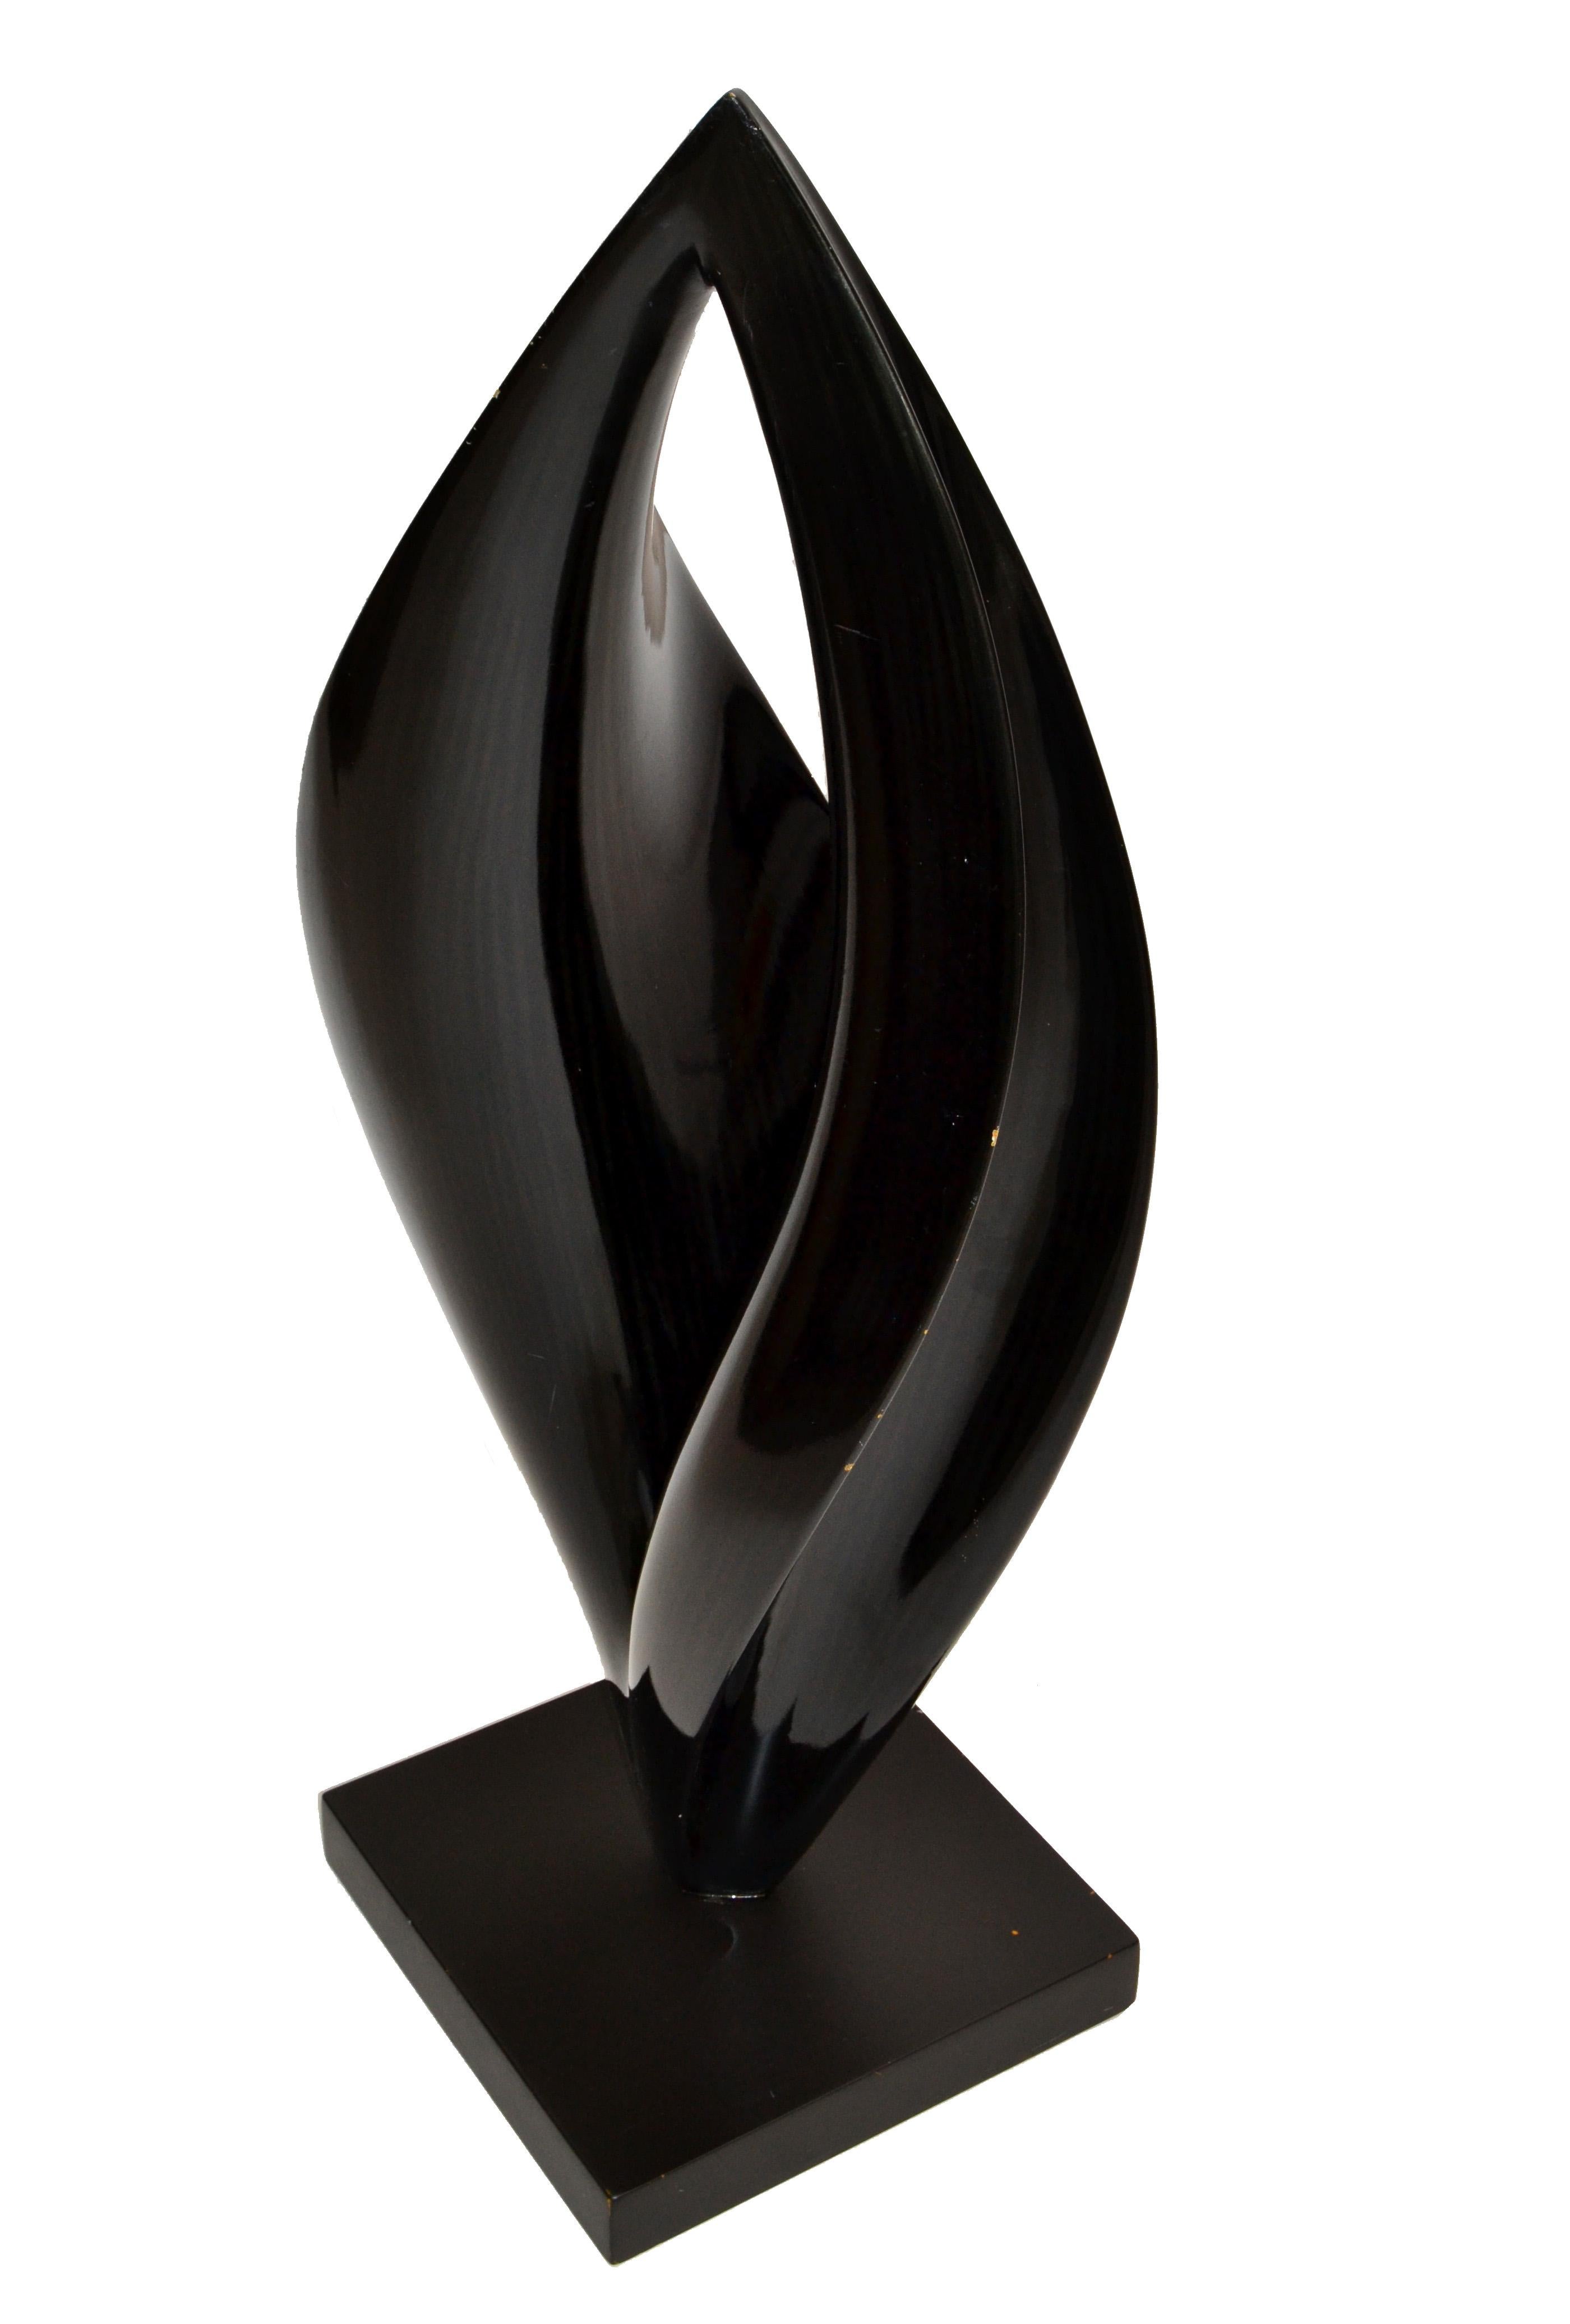 American Black Lacquer Sculptural Wood Mid-Century Modern Fine Art Sculpture Square Base For Sale